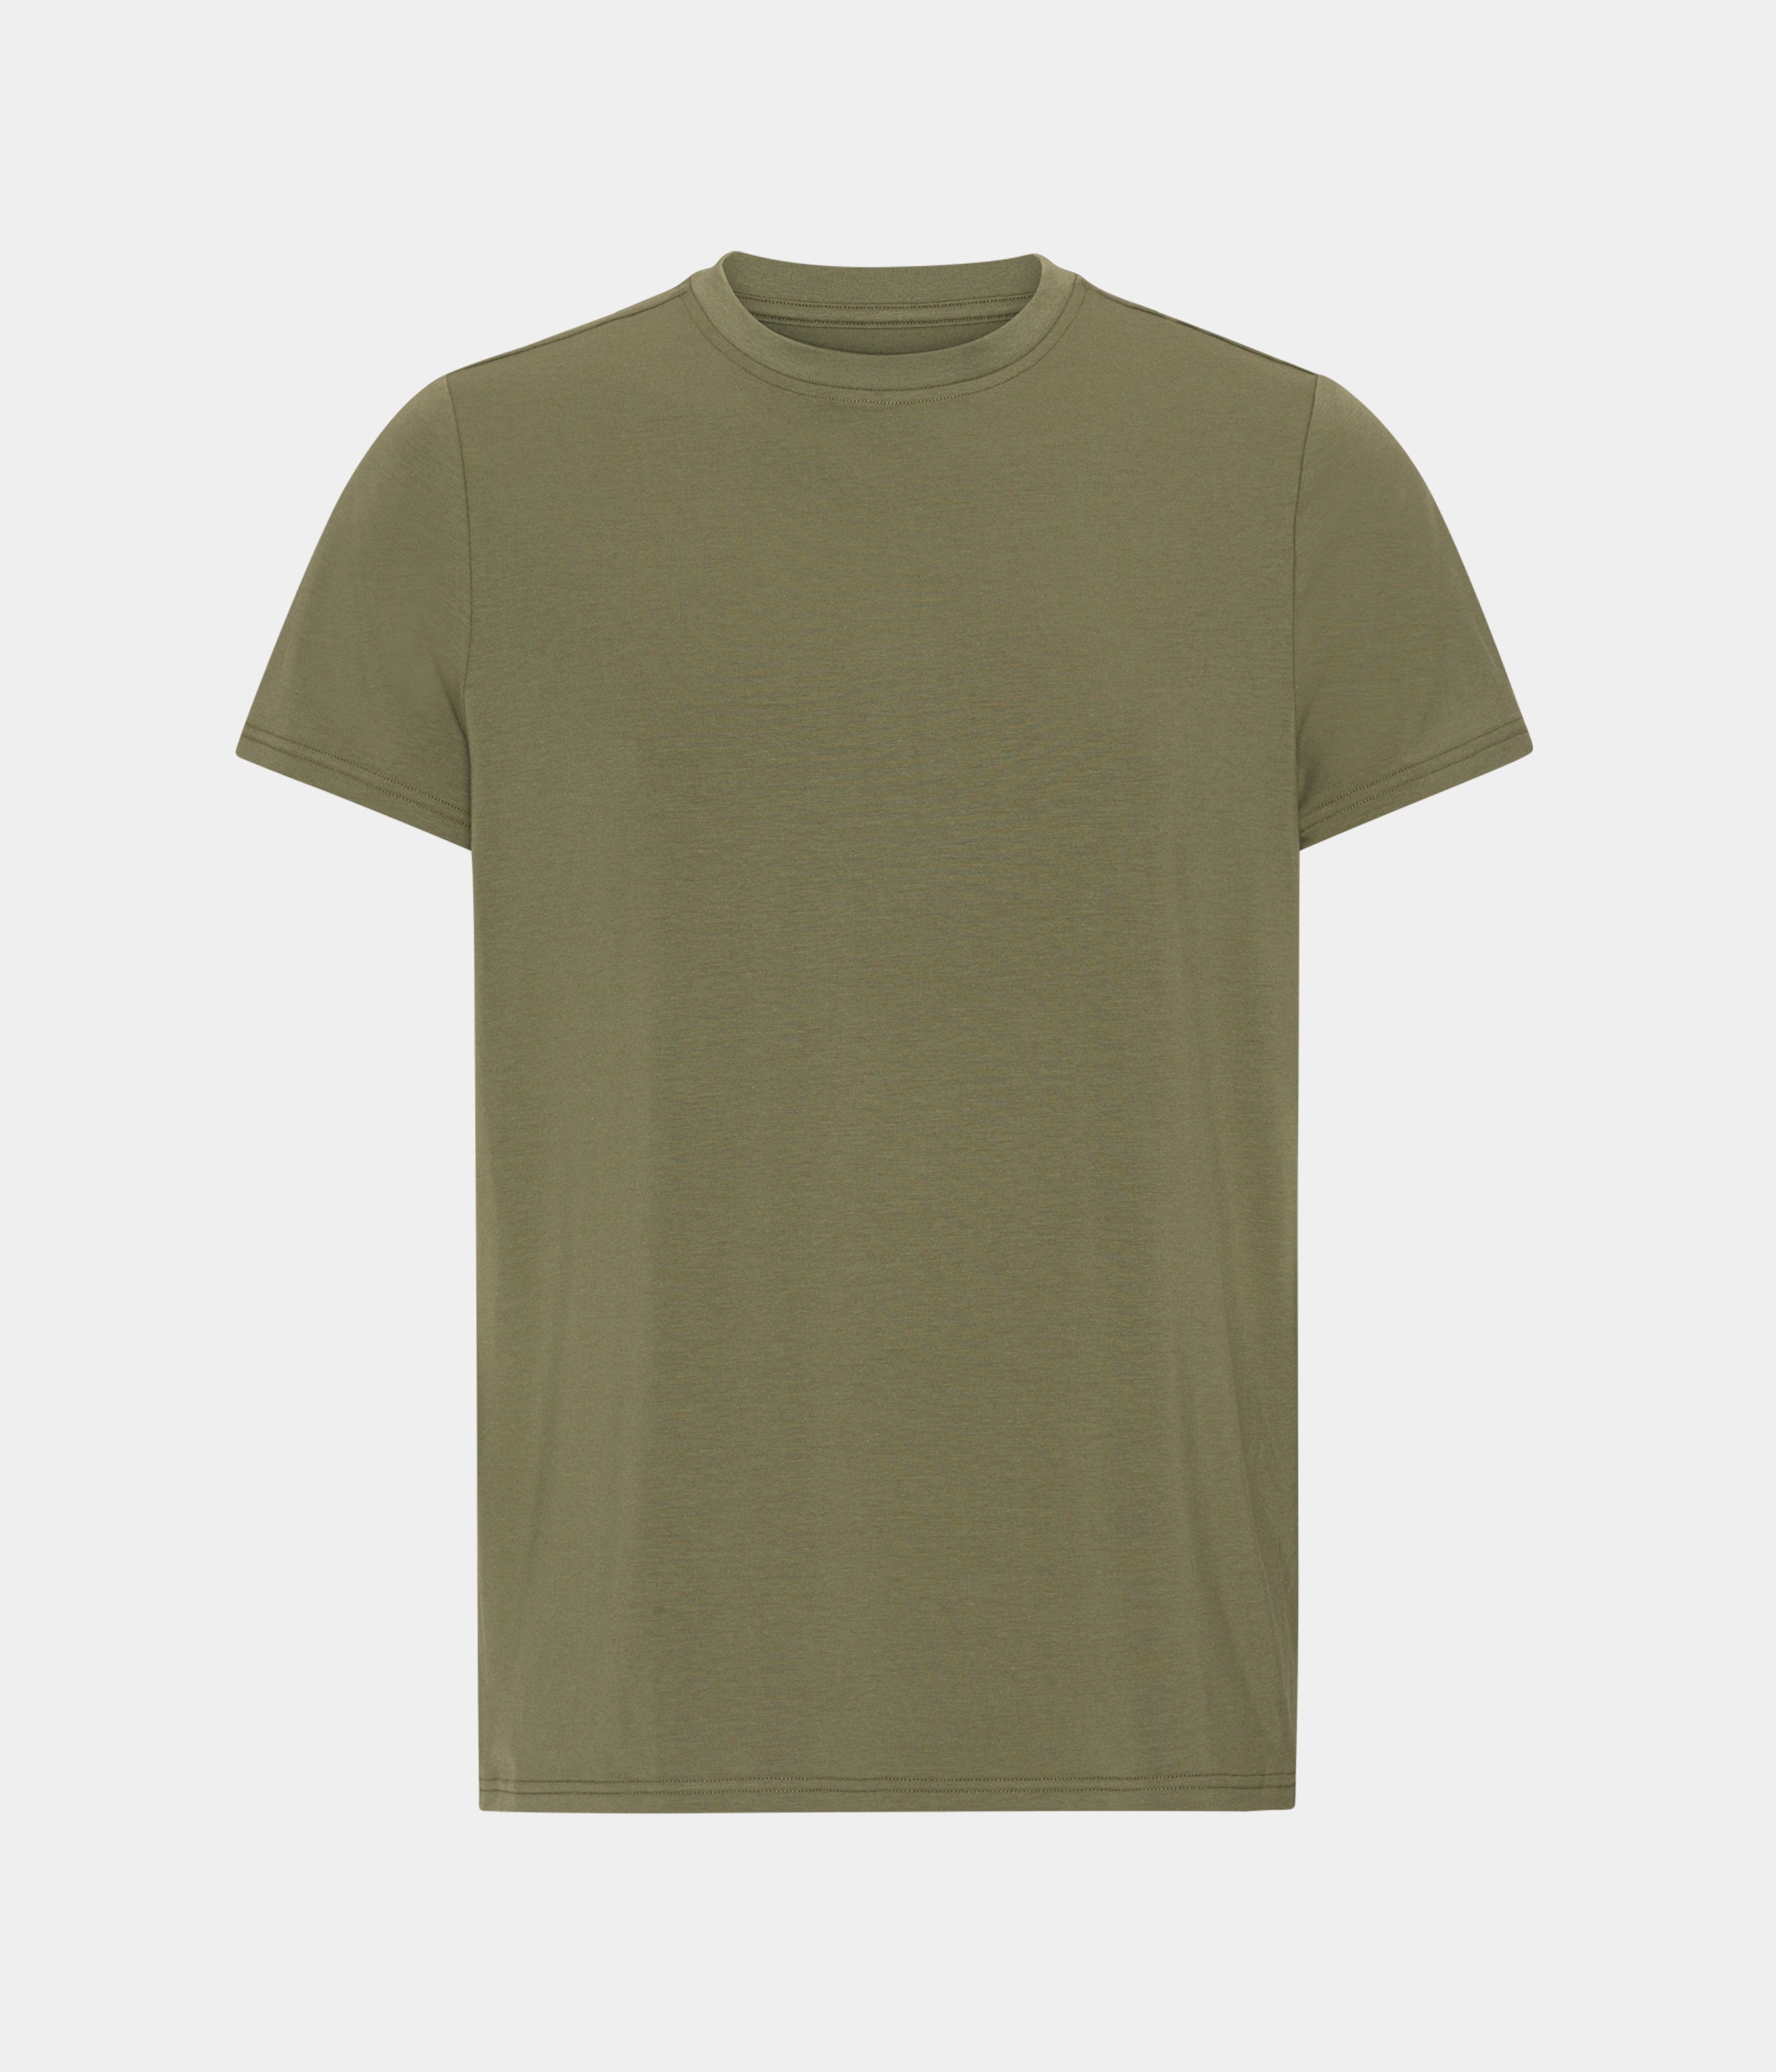 Olivengrøn bambus T-shirt med crew neck til mænd fra Copenhagen Bamboo, XXL